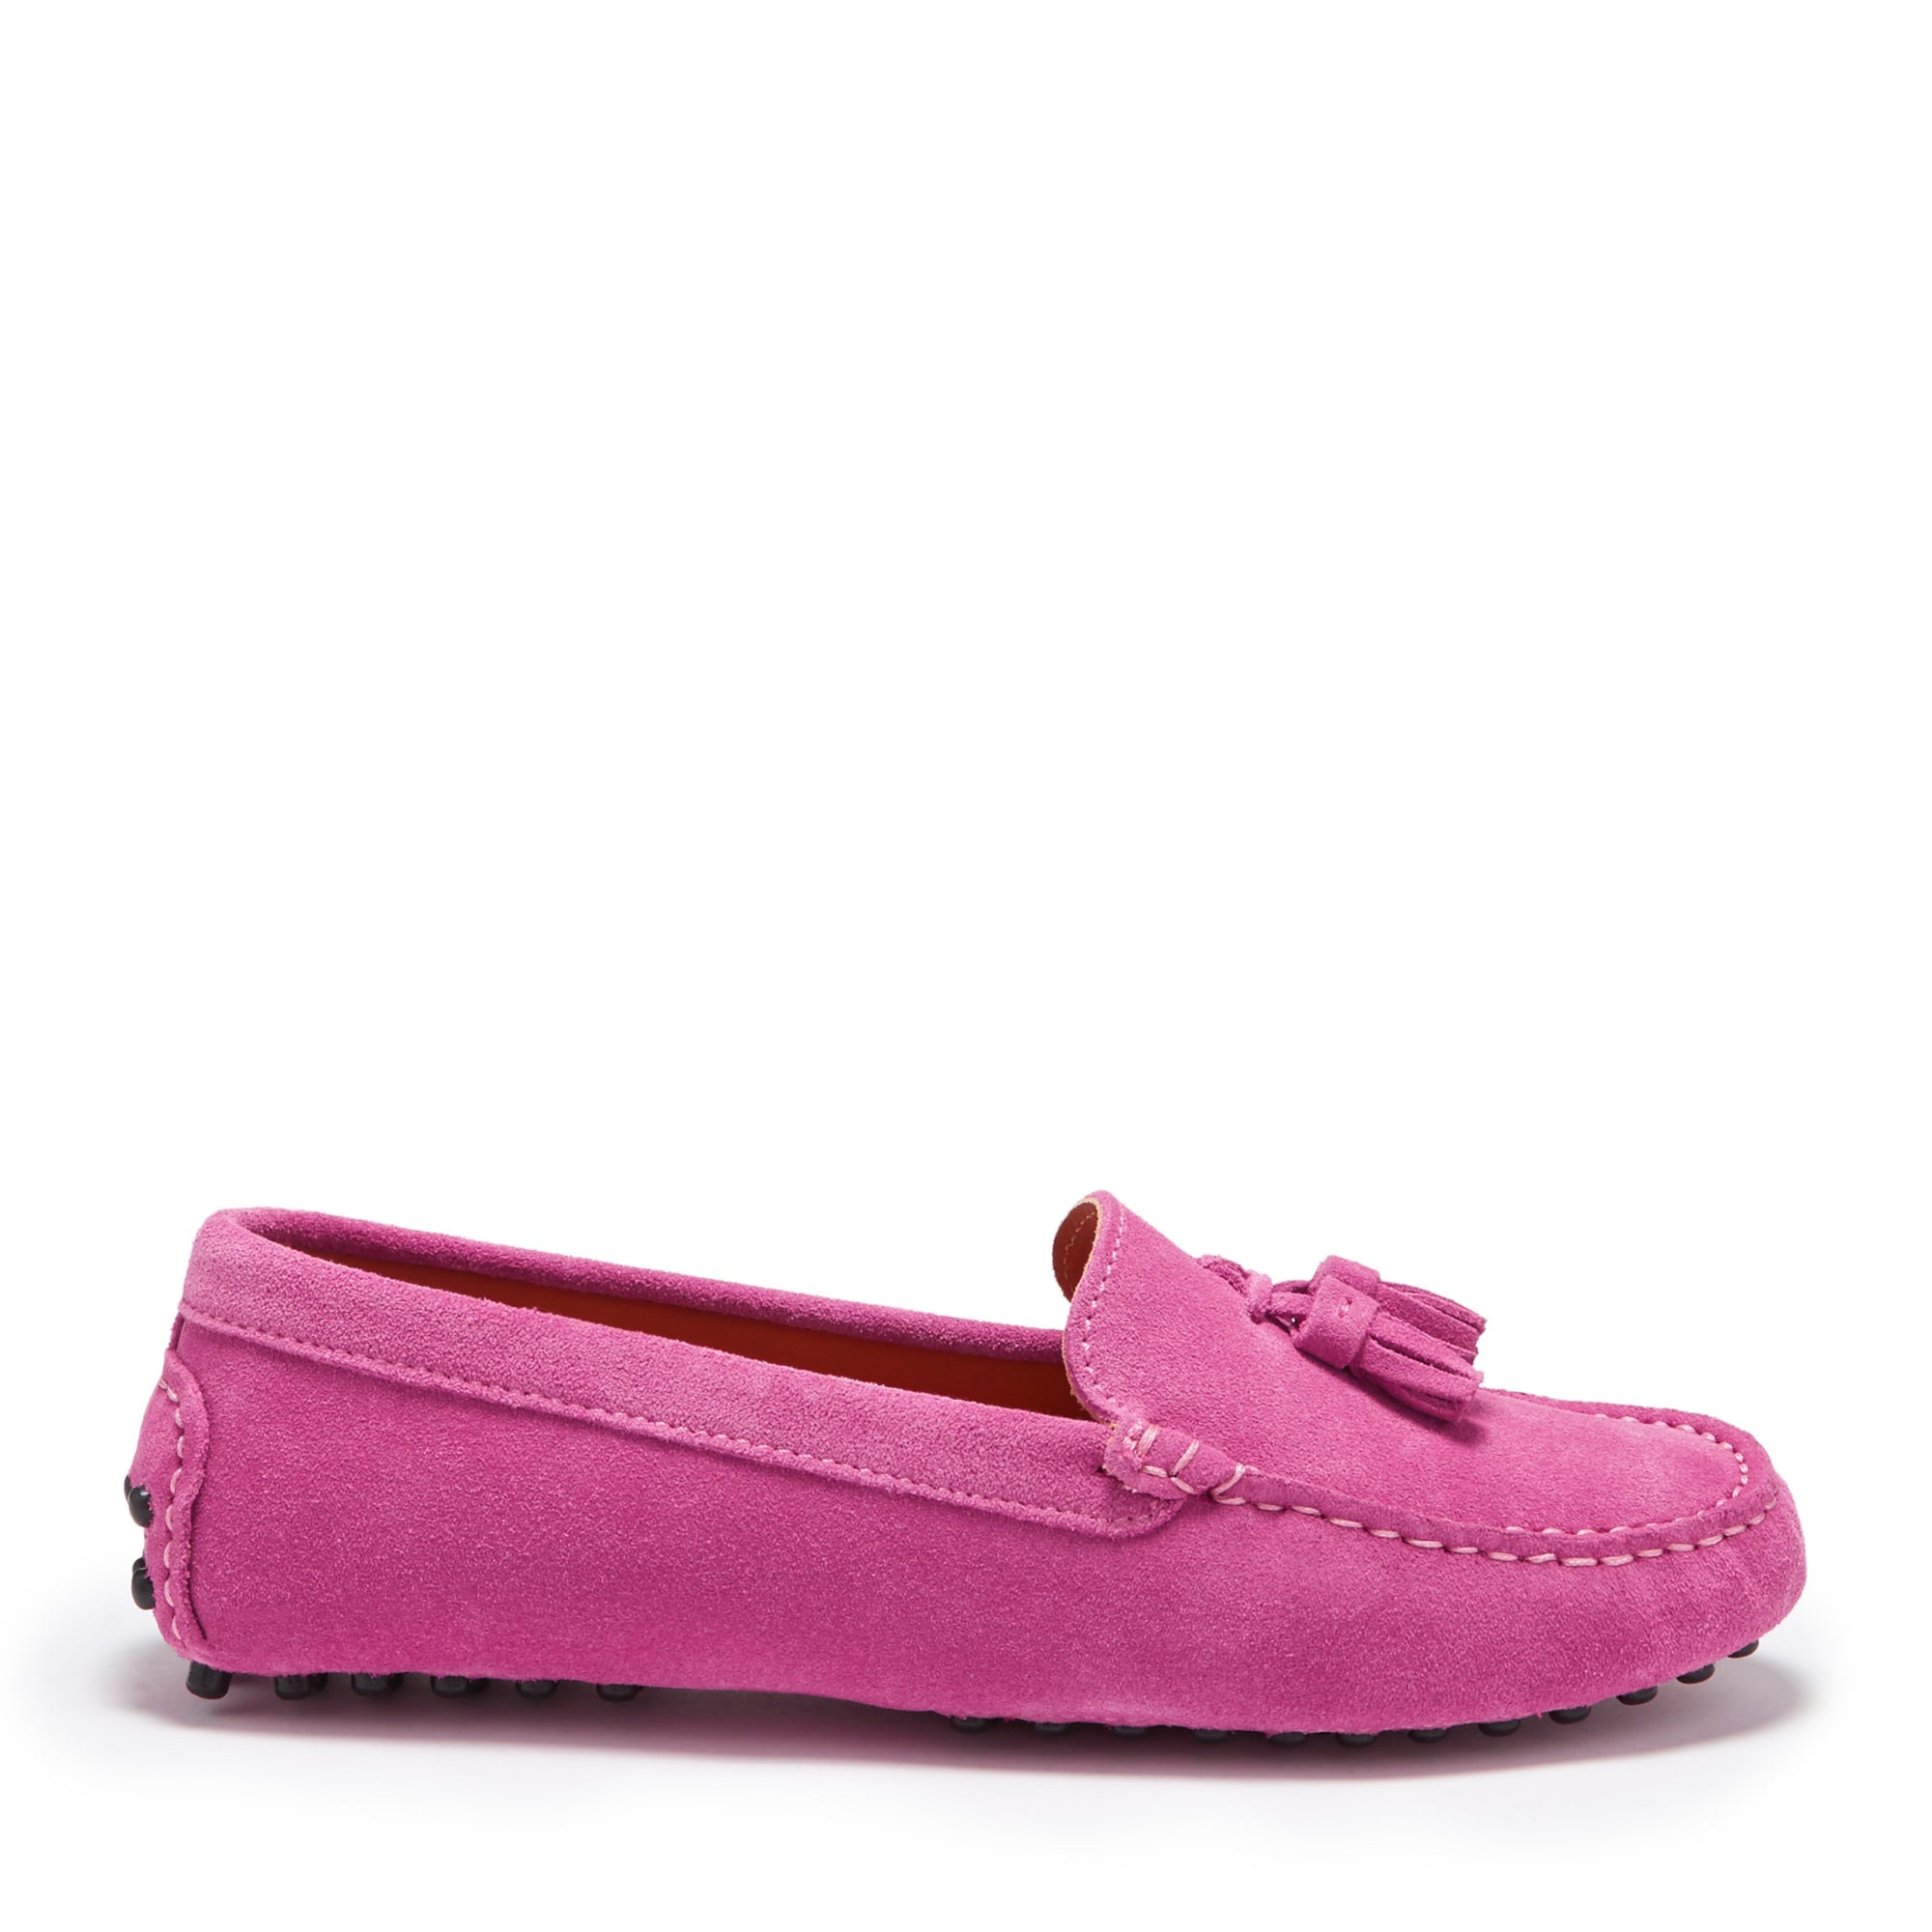 Women's Tasselled Driving Loafers, pink suede - Hugs & Co.